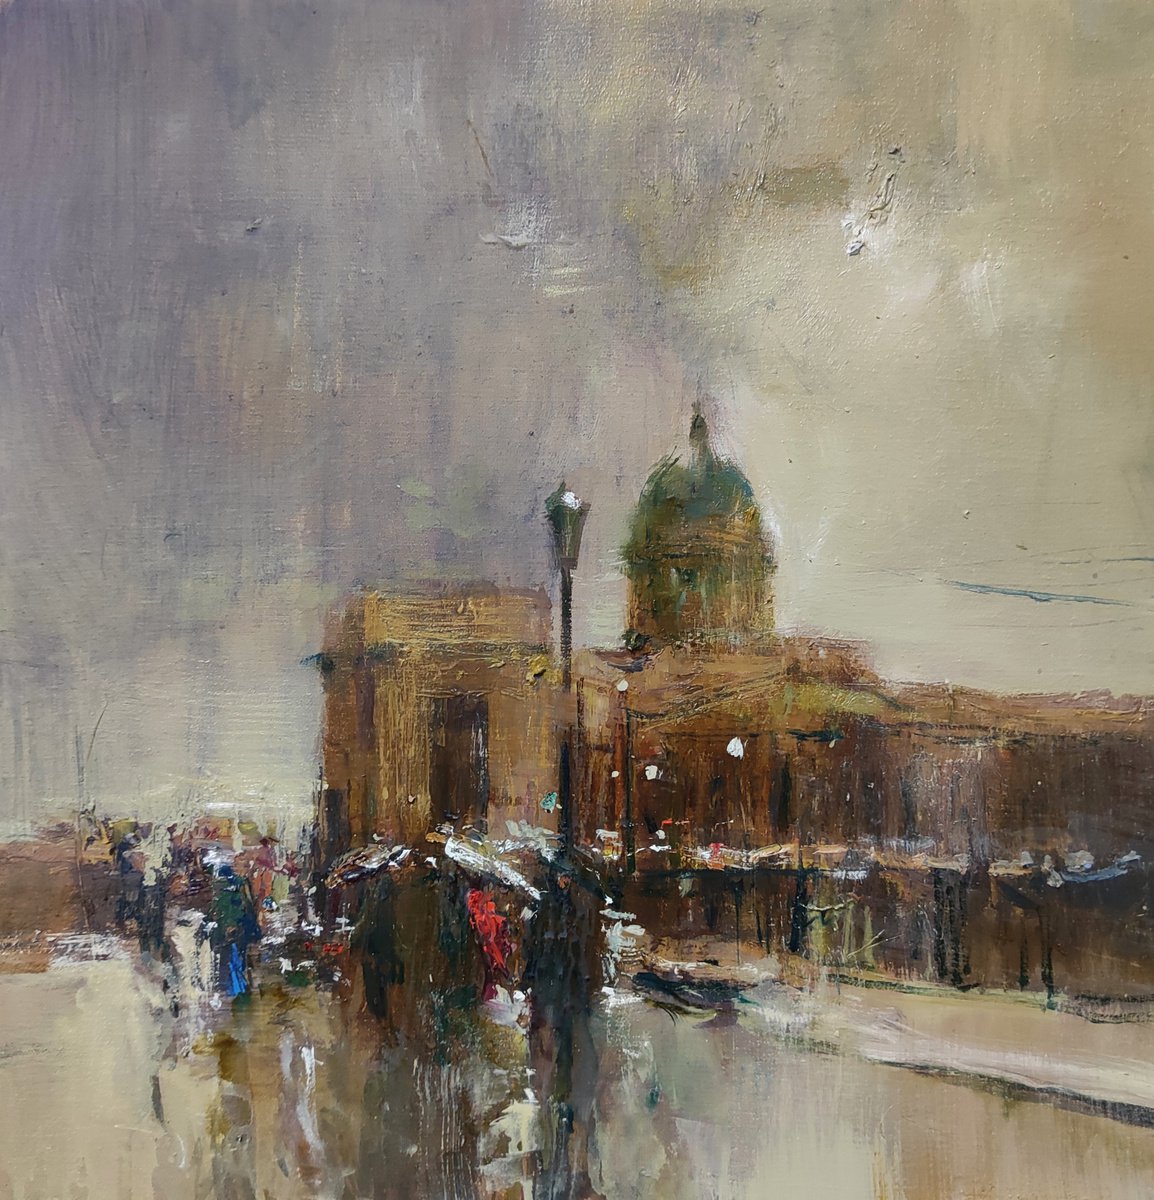 Rain in St. Petersburg by Dmitrii Ermolov